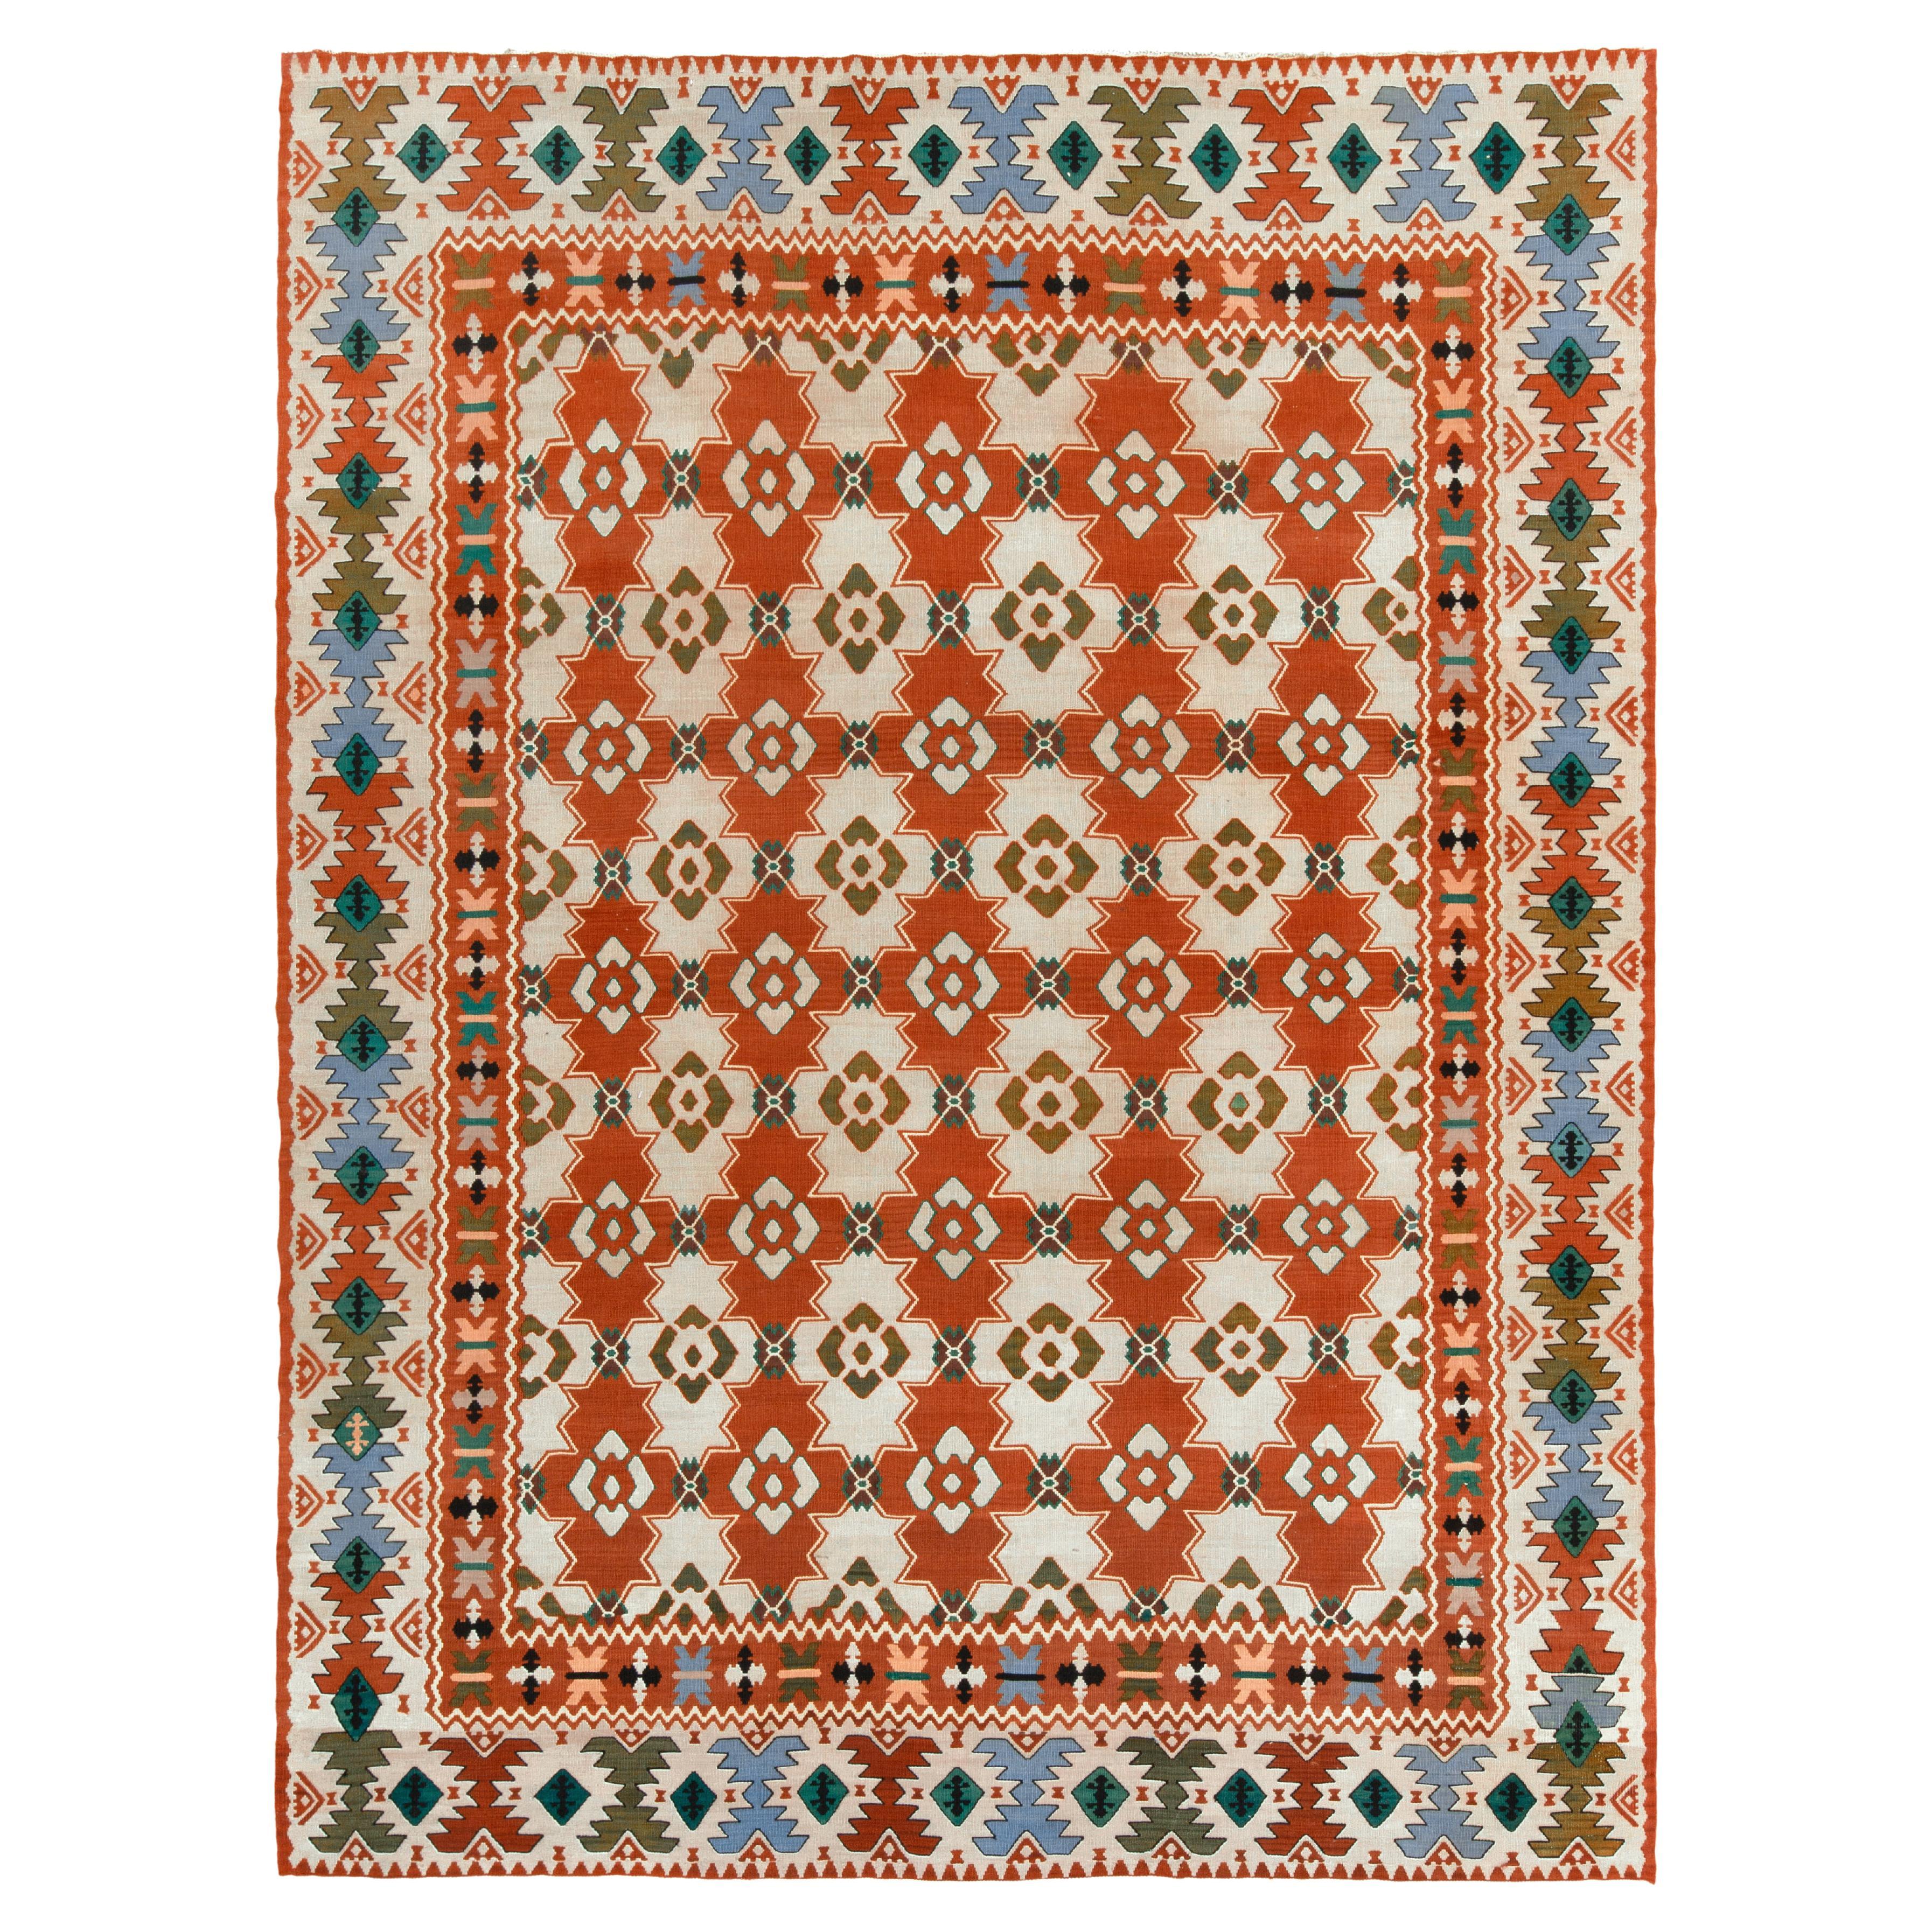 Handwoven Vintage Turkish Kilim Rug in Orange Tribal Geometric by Rug & Kilim